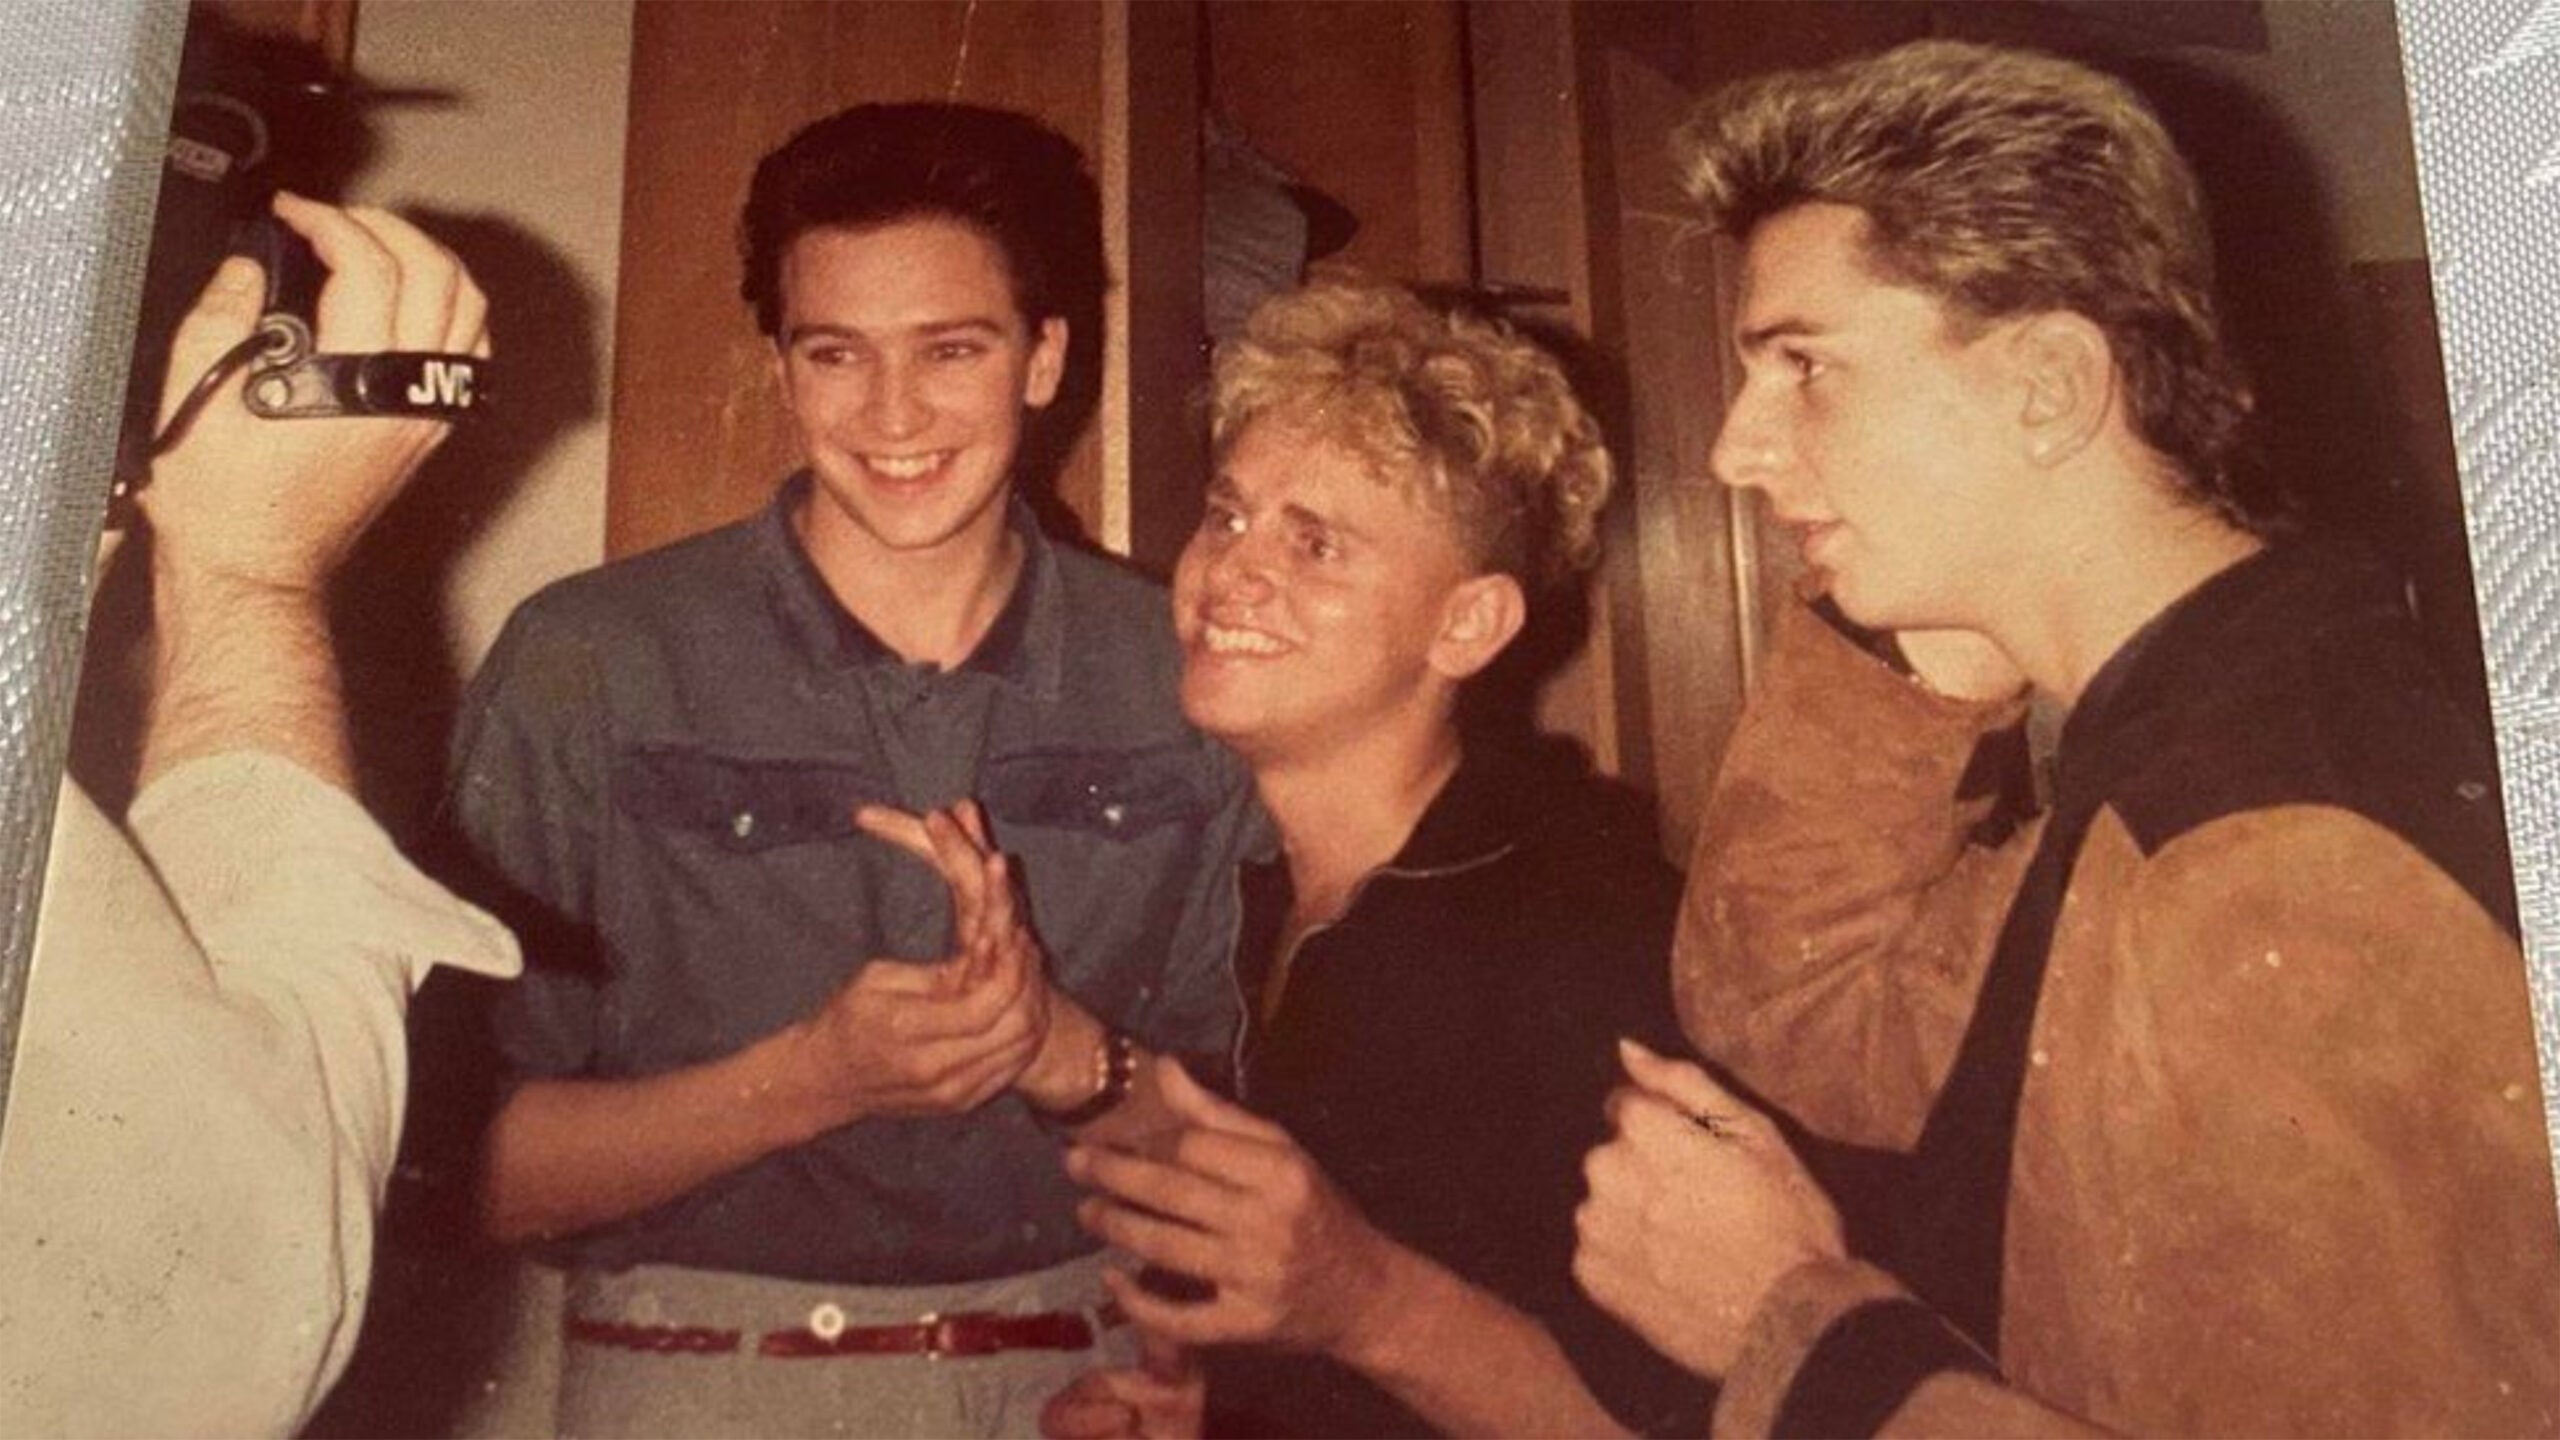 Photo of Depeche Mode taken by the band on a fan's roll of film